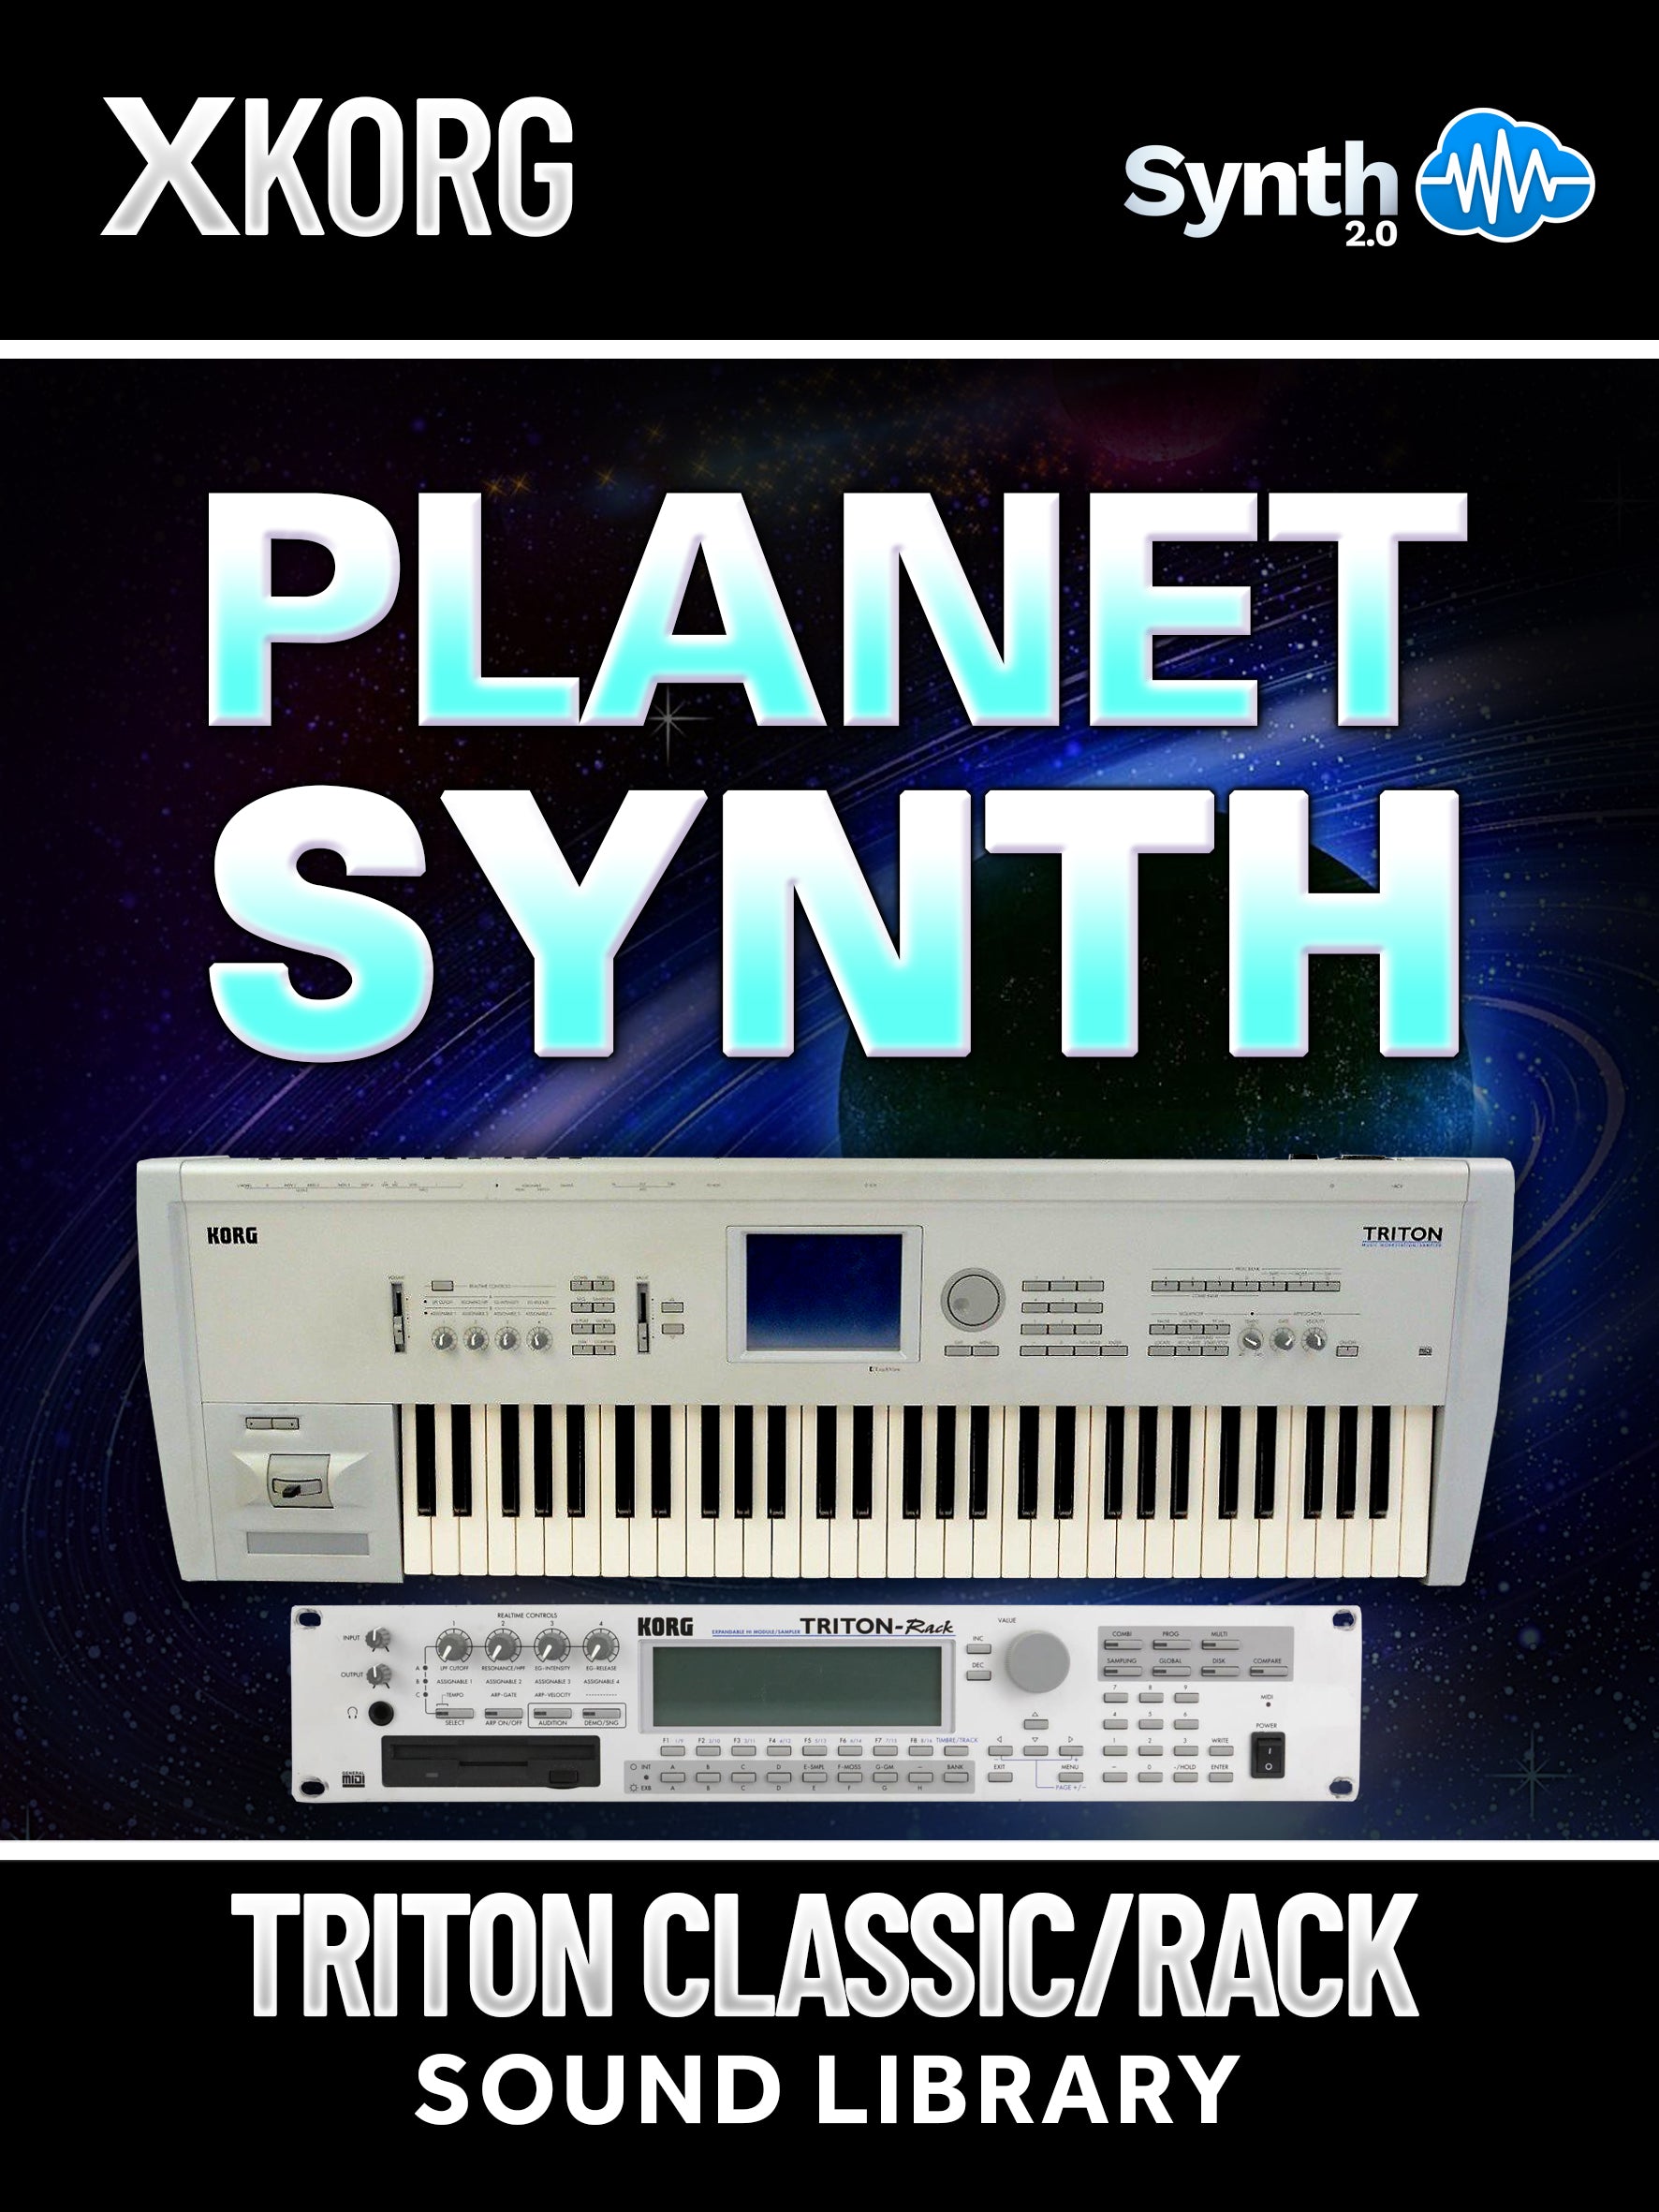 SSX104 - Planet Synth - Korg Triton CLASSIC / RACK ( 18 presets )